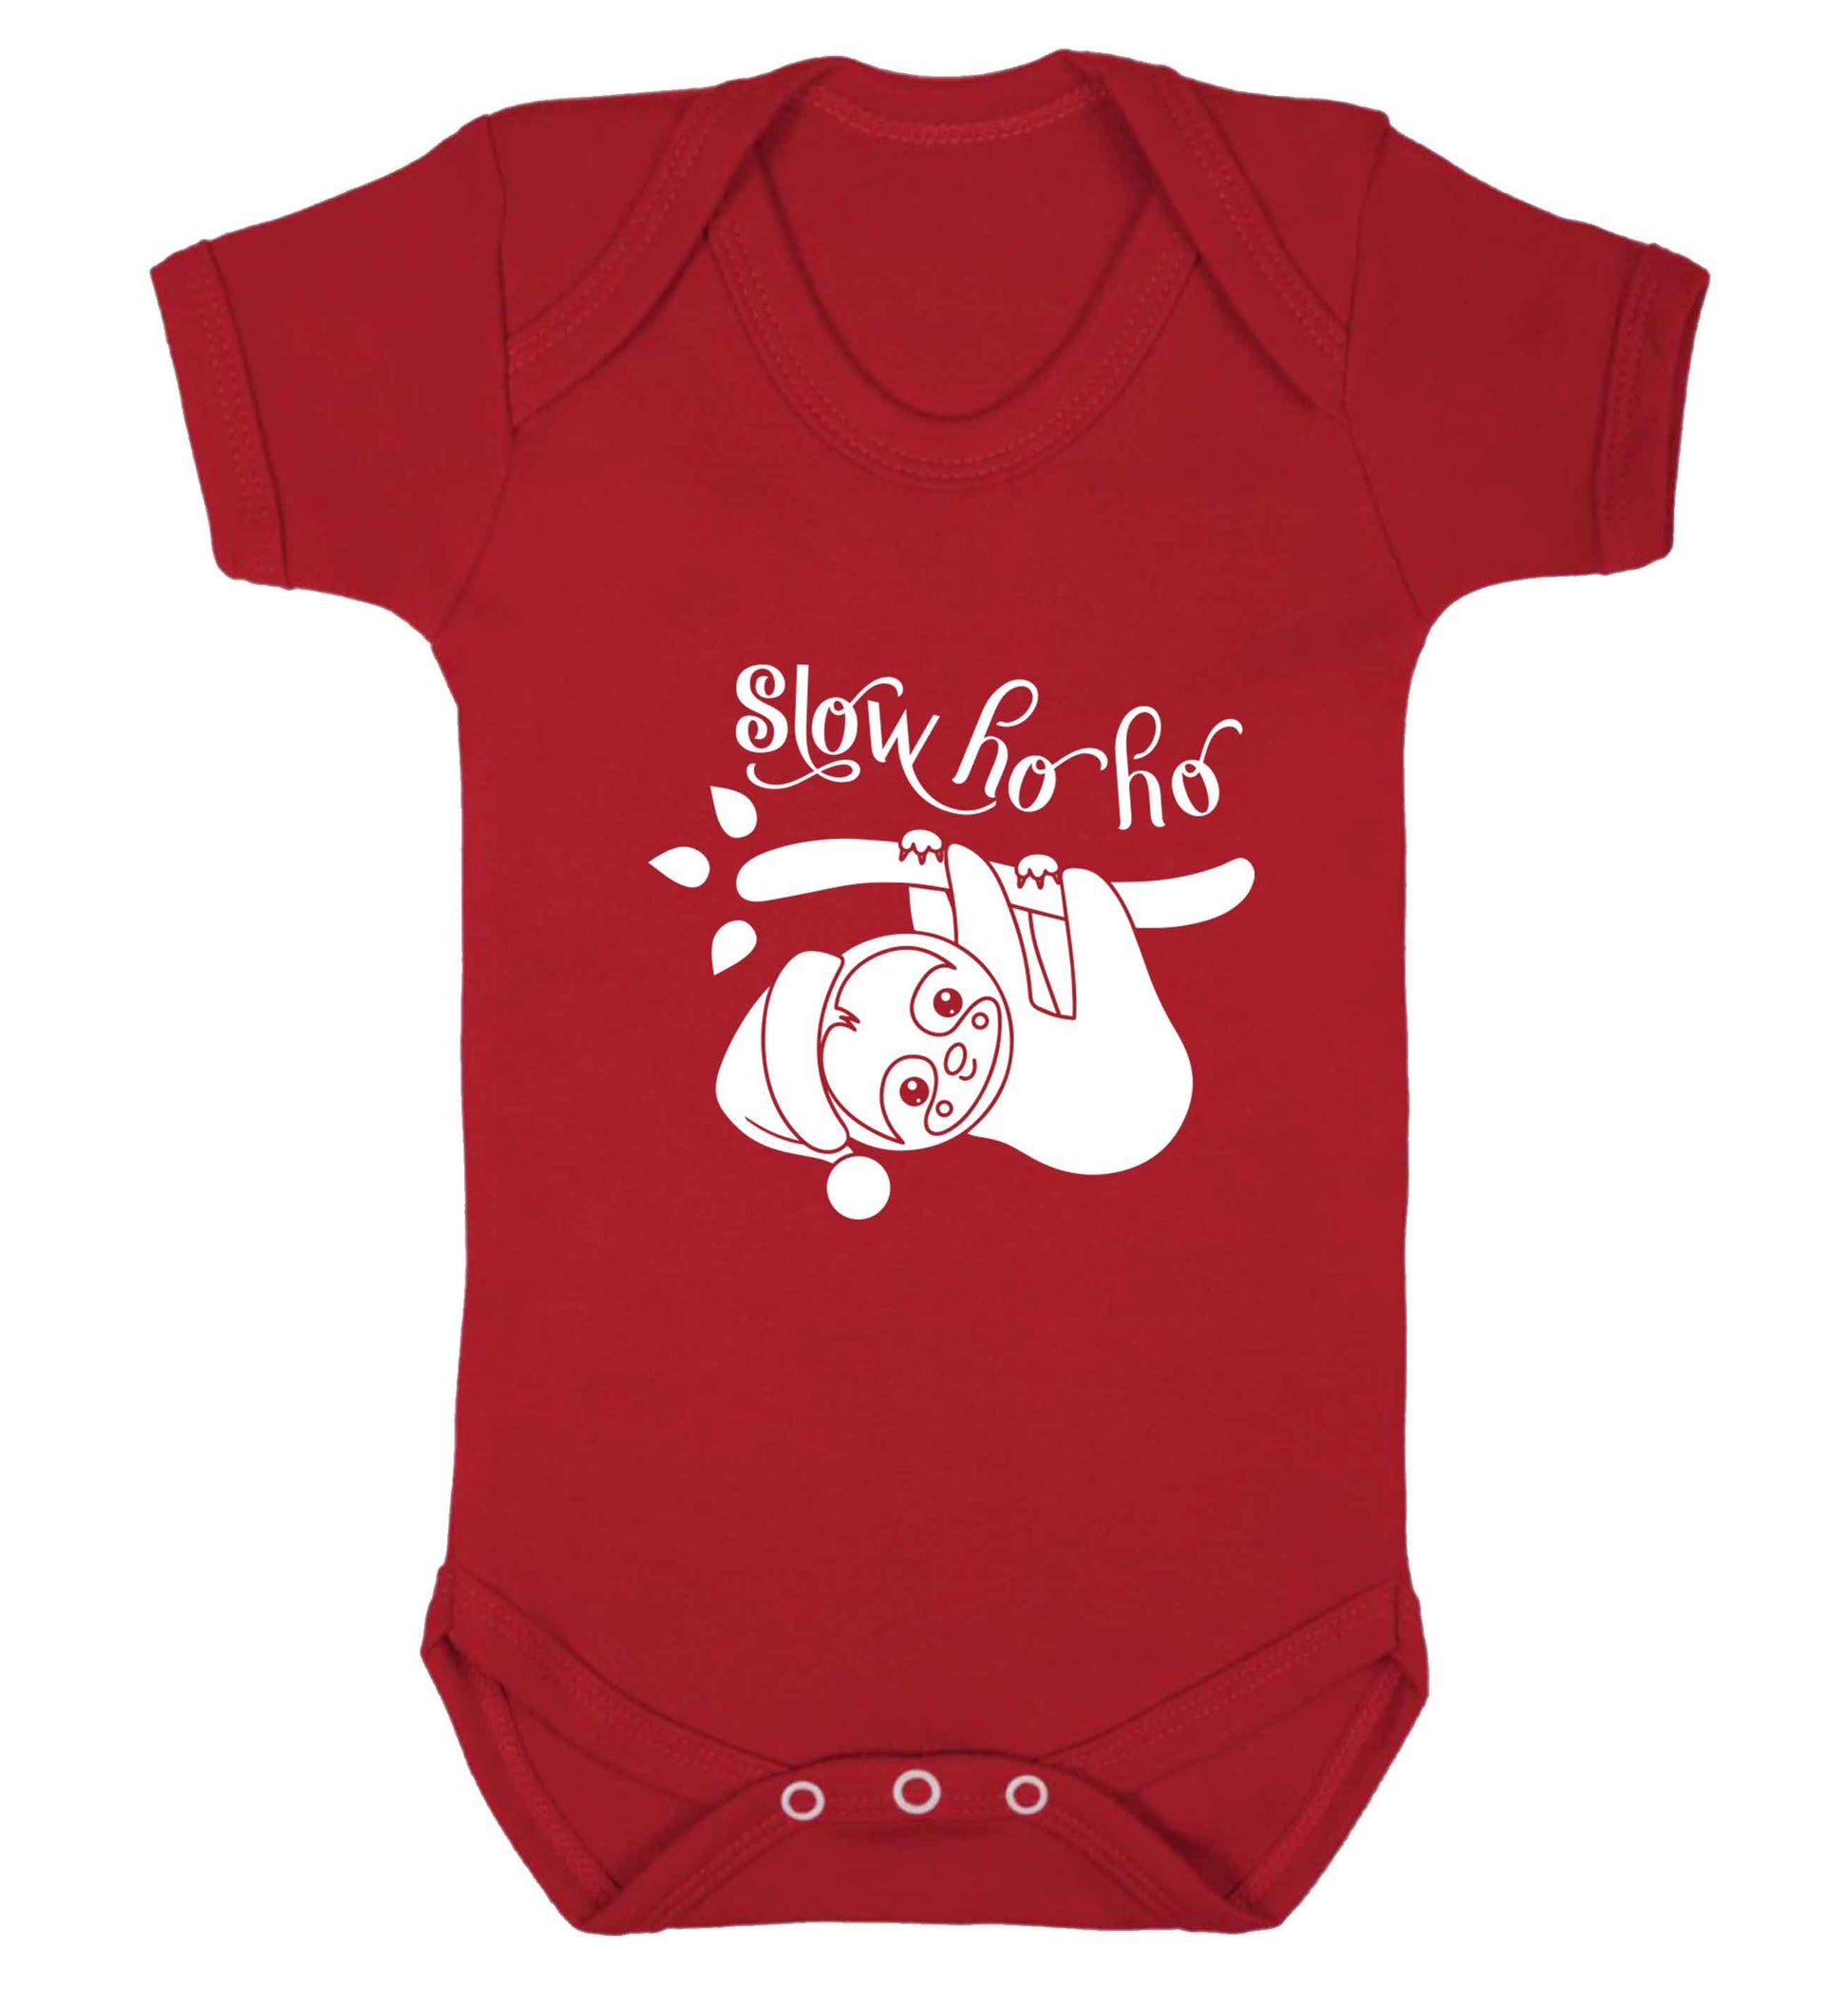 Slow Ho Ho baby vest red 18-24 months